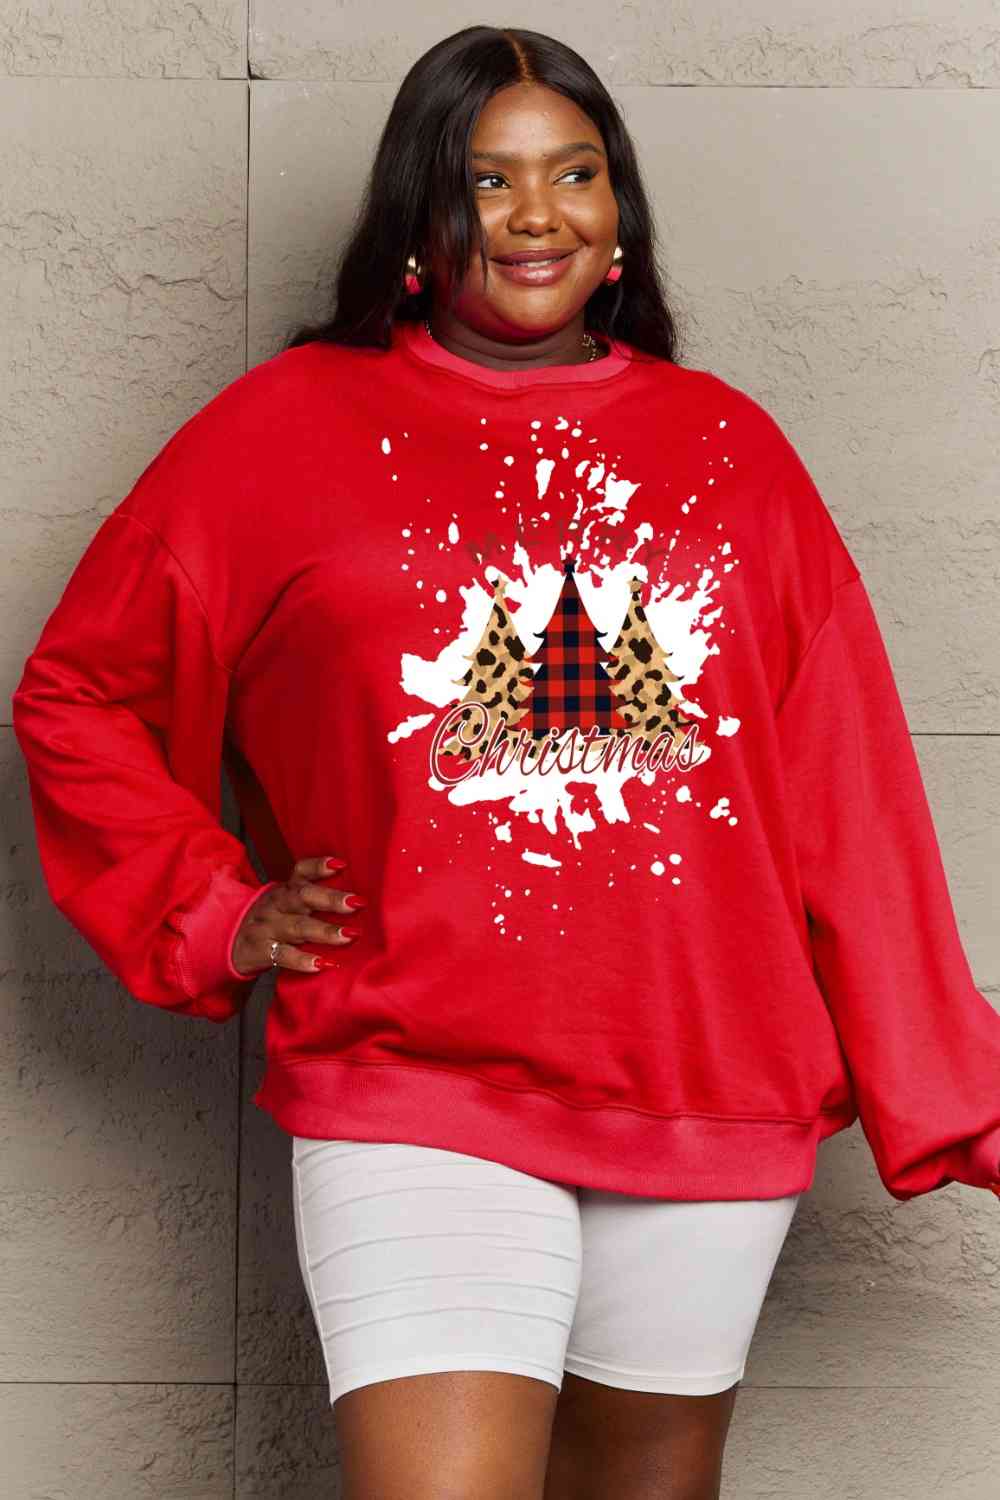 Simply Love Full Size MERRY CHRISTMAS Graphic Sweatshirt